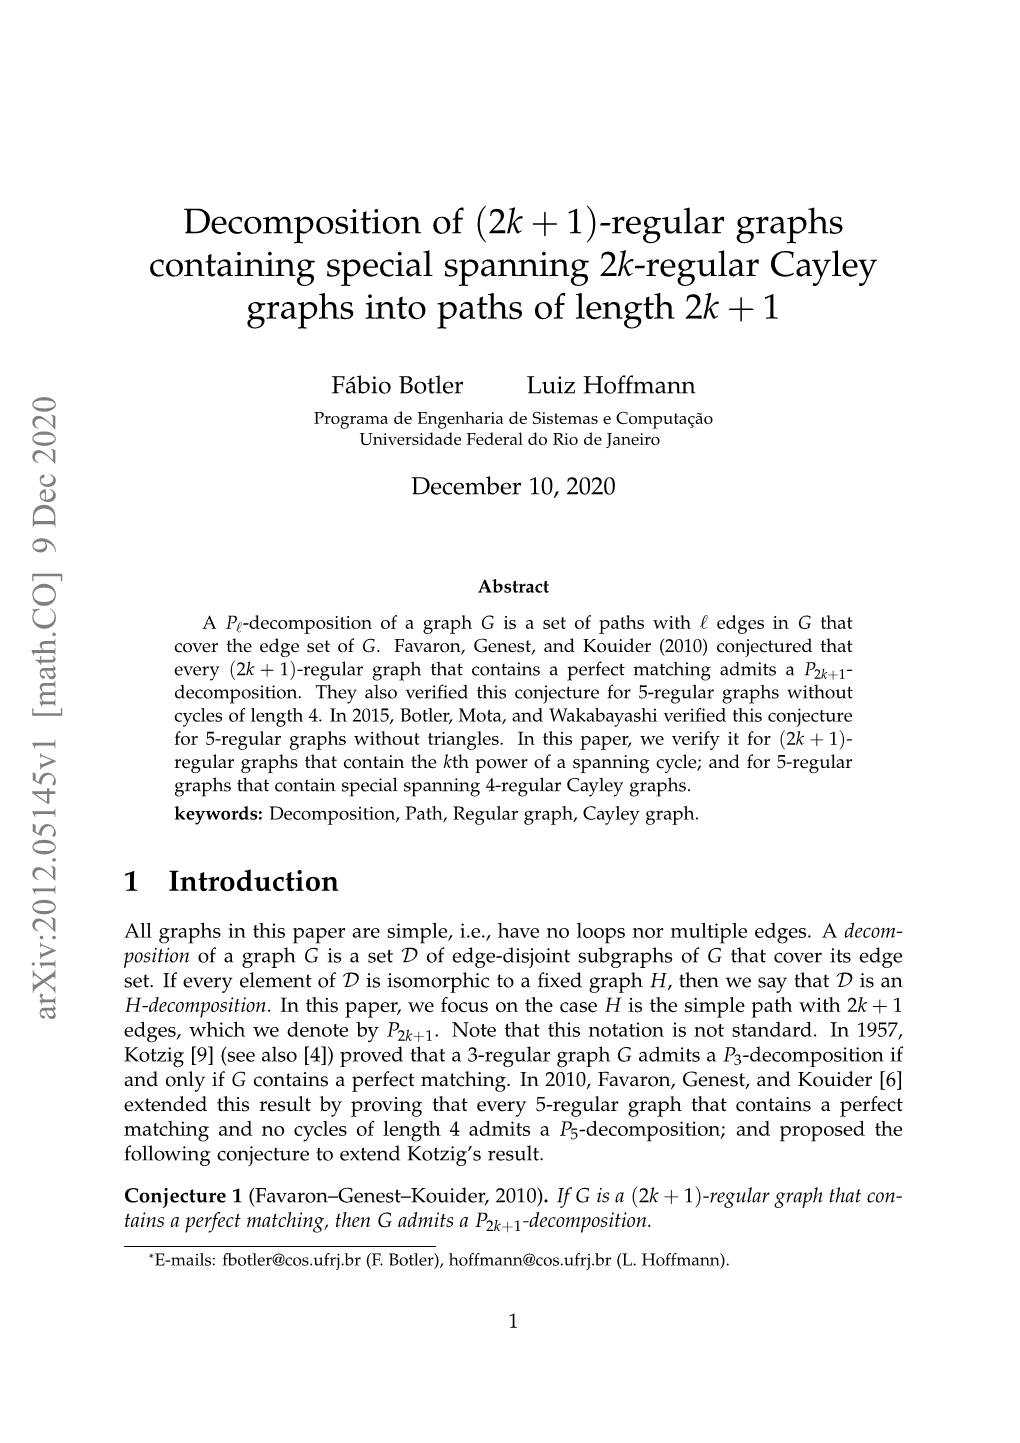 Regular Graphs Containing Special Spanning 2K-Regular Cayley